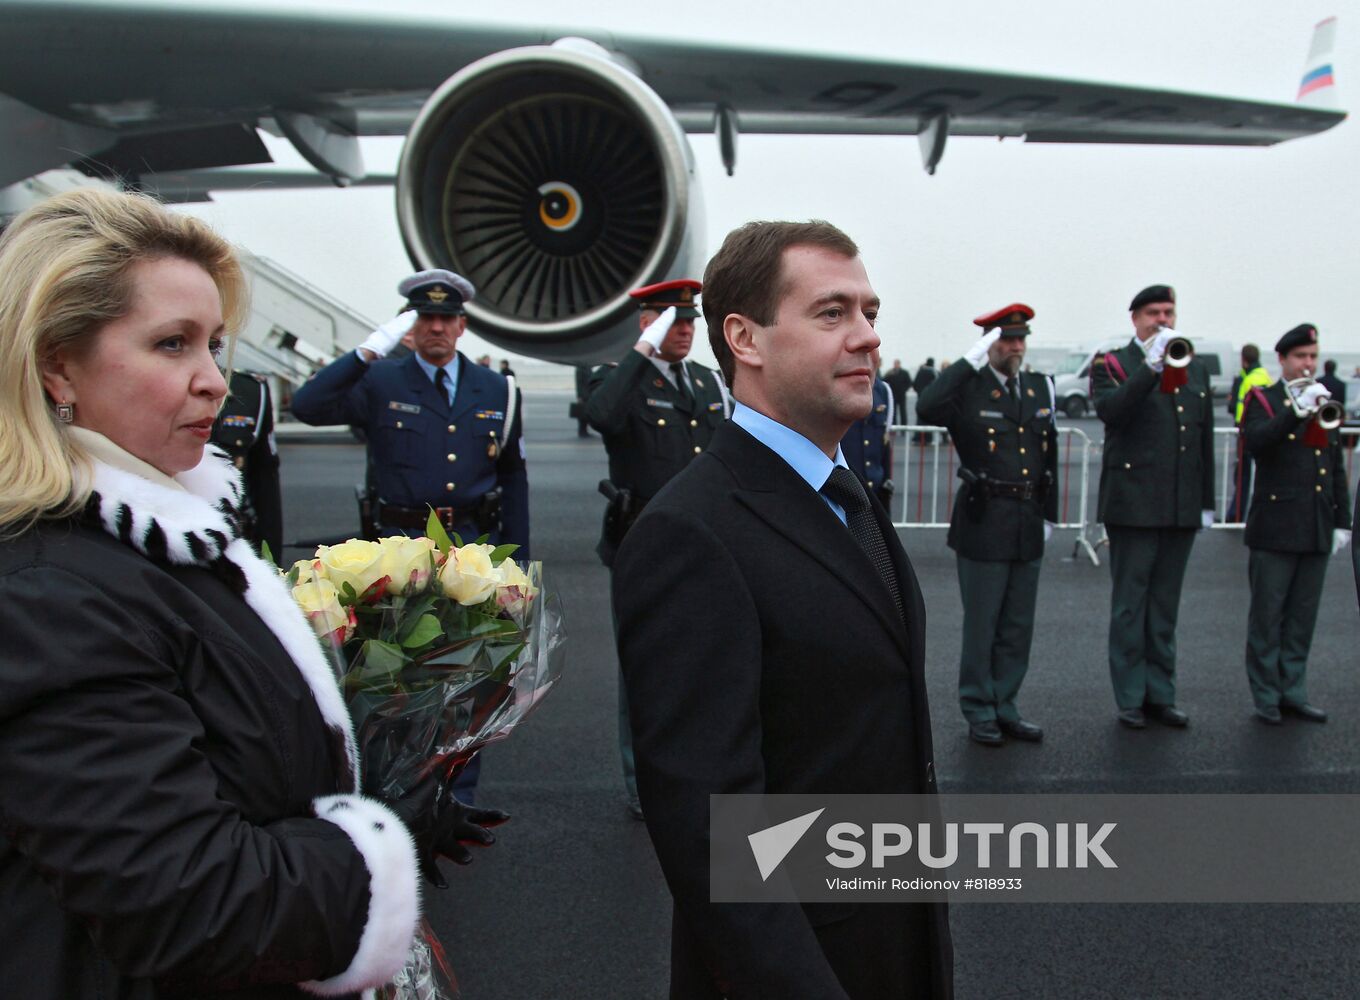 Dmitry Medvedev arrives in Brussels for Russia-EU summit